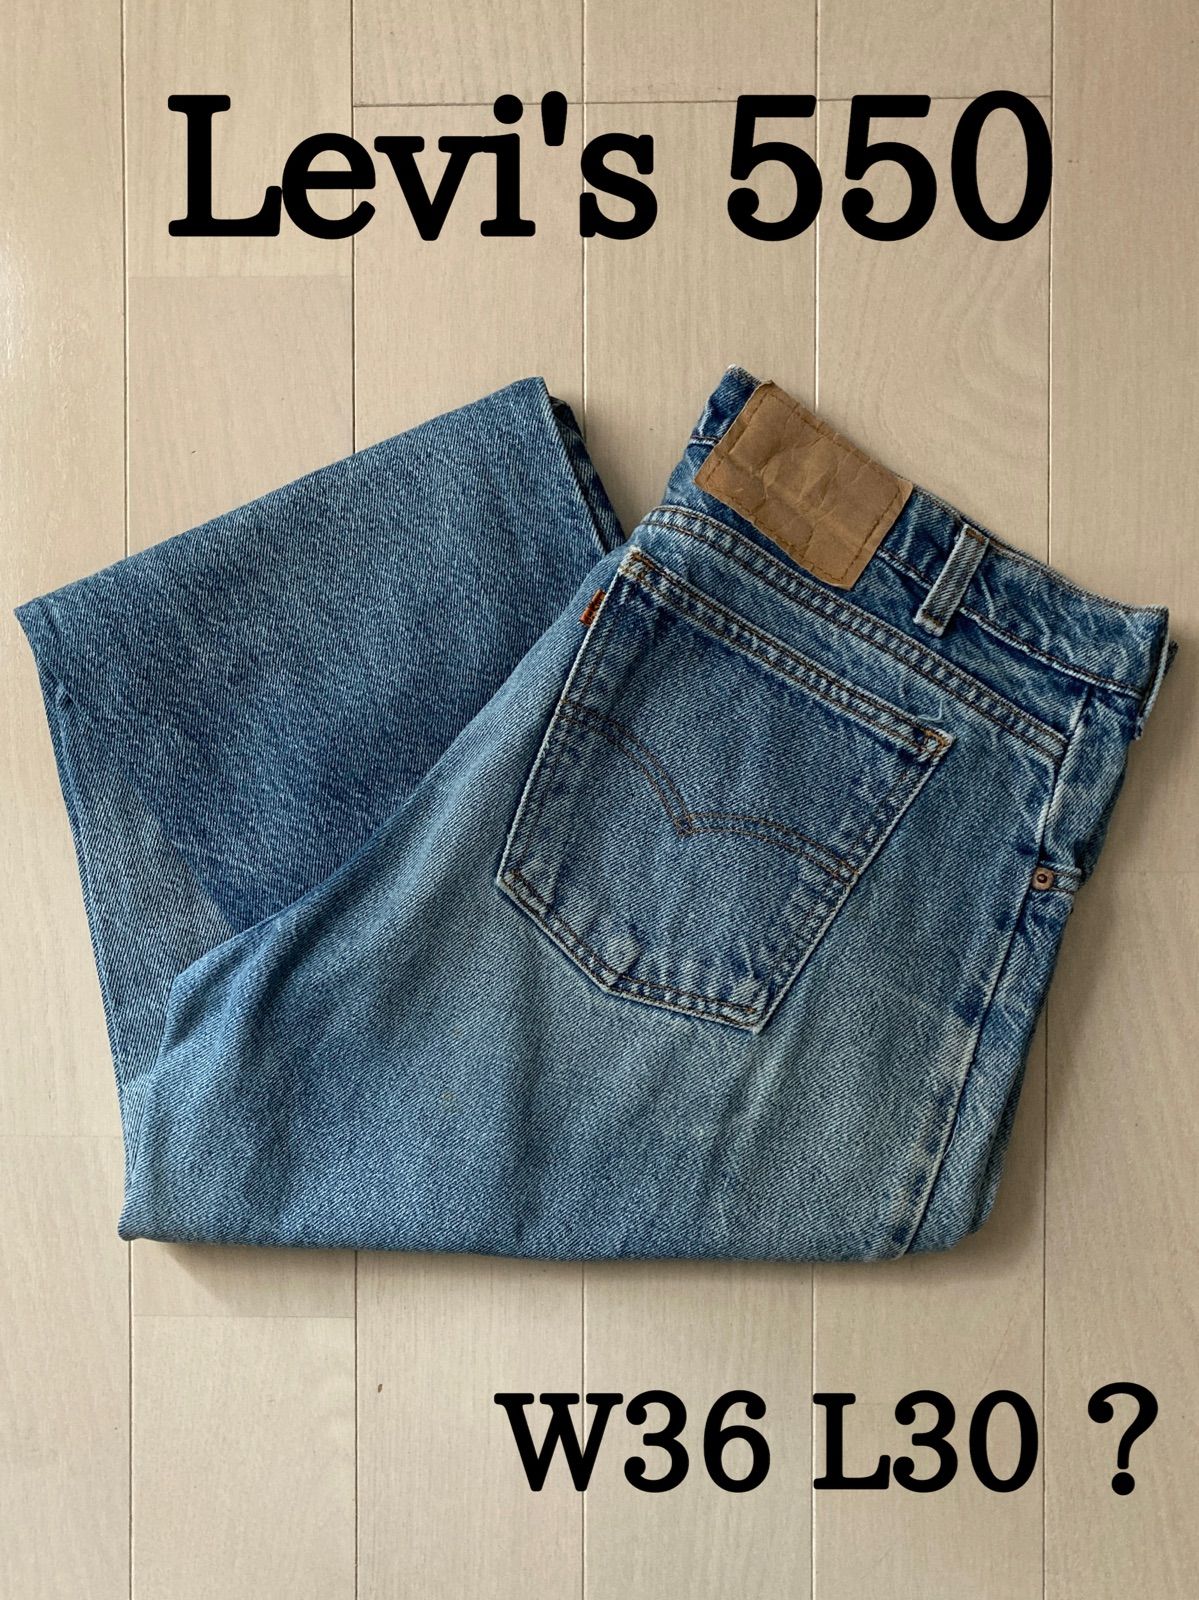 T310 【Levi’s 550】W36 L32 ブルー 極太 ワイド バギー